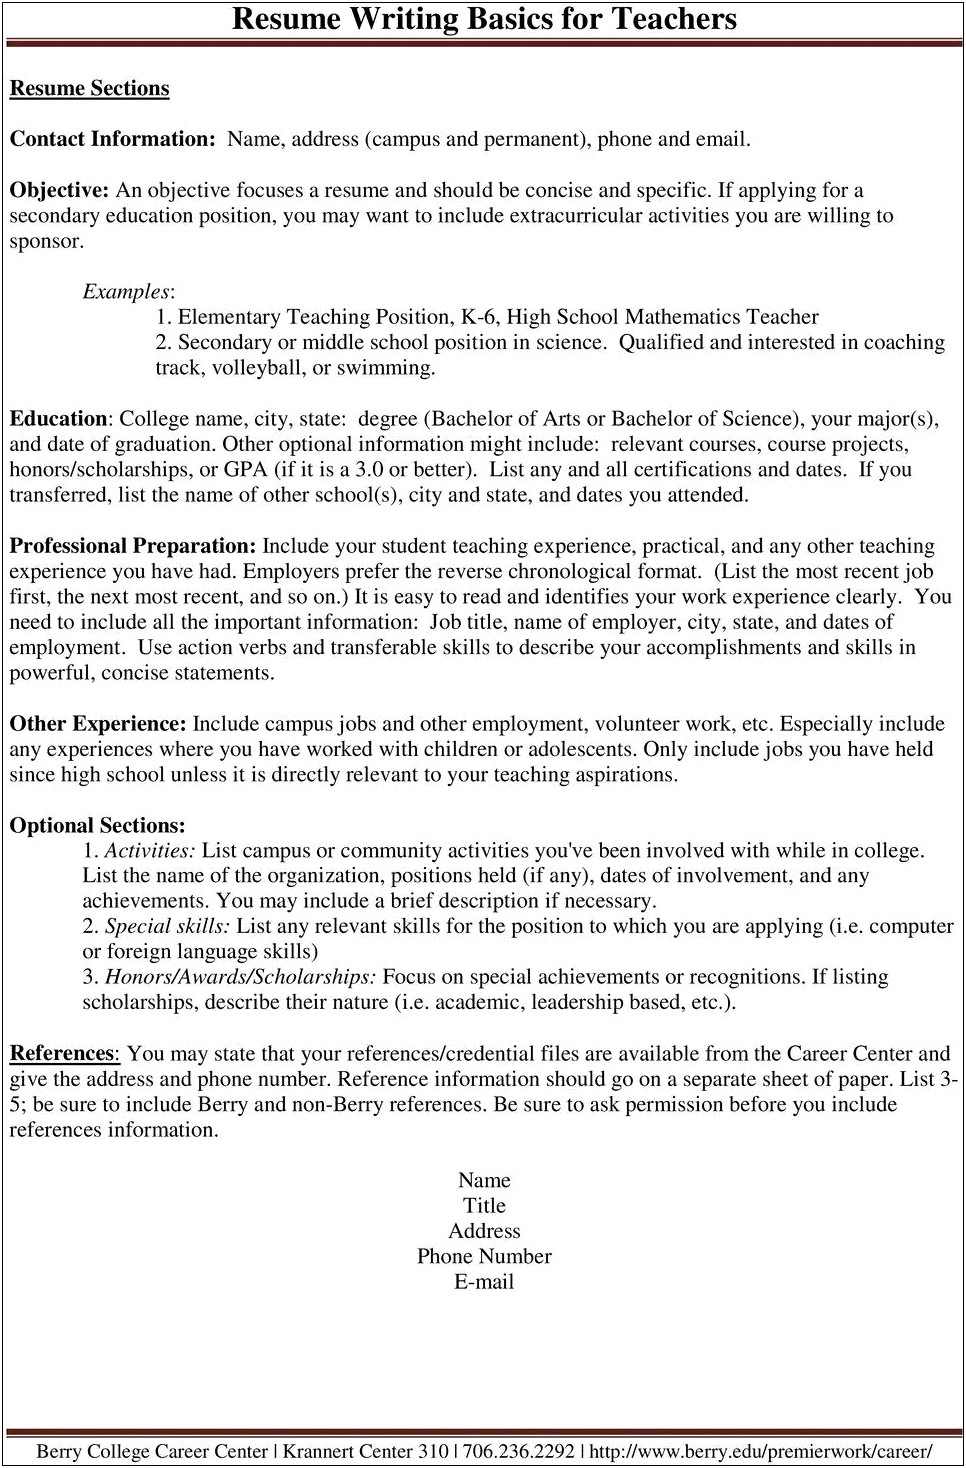 Resume For Elementary Teacher At Title 1 School